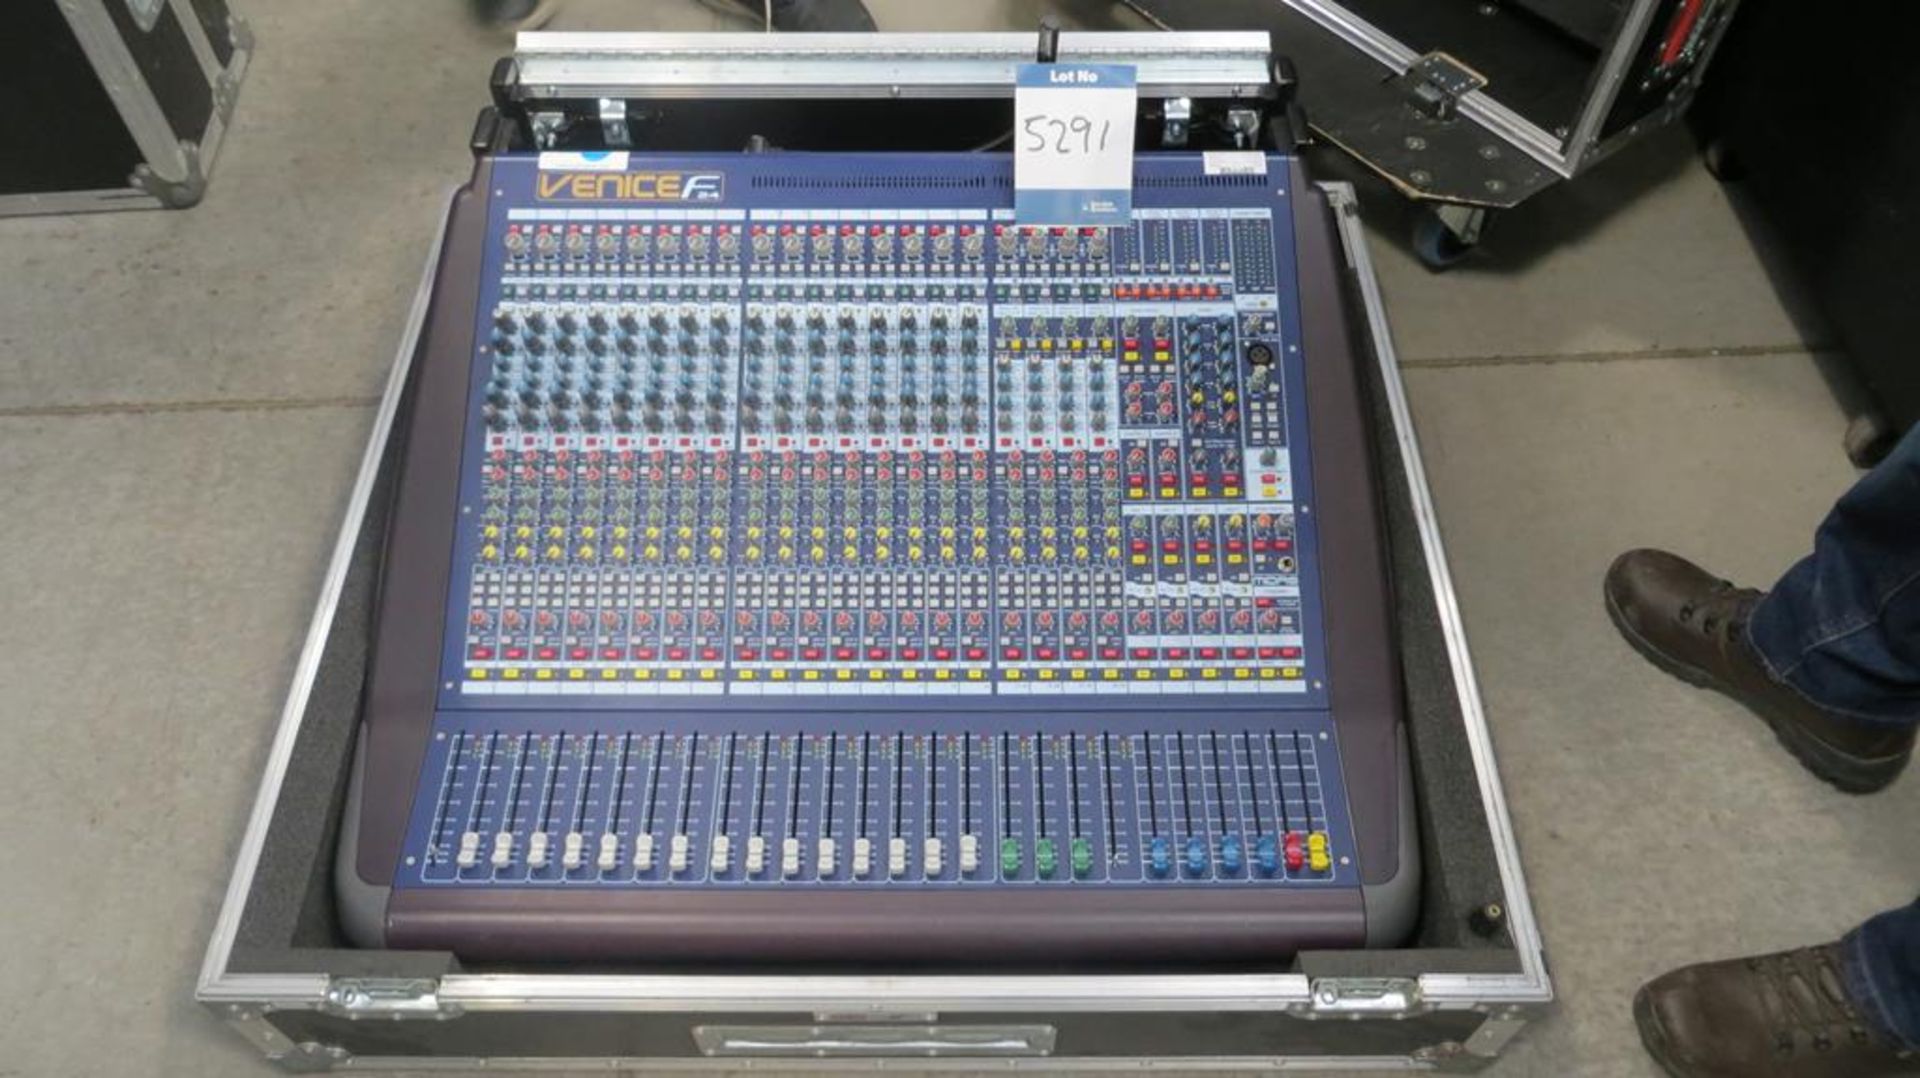 Midas, Venice F analogue mixer, Model F240, Serial